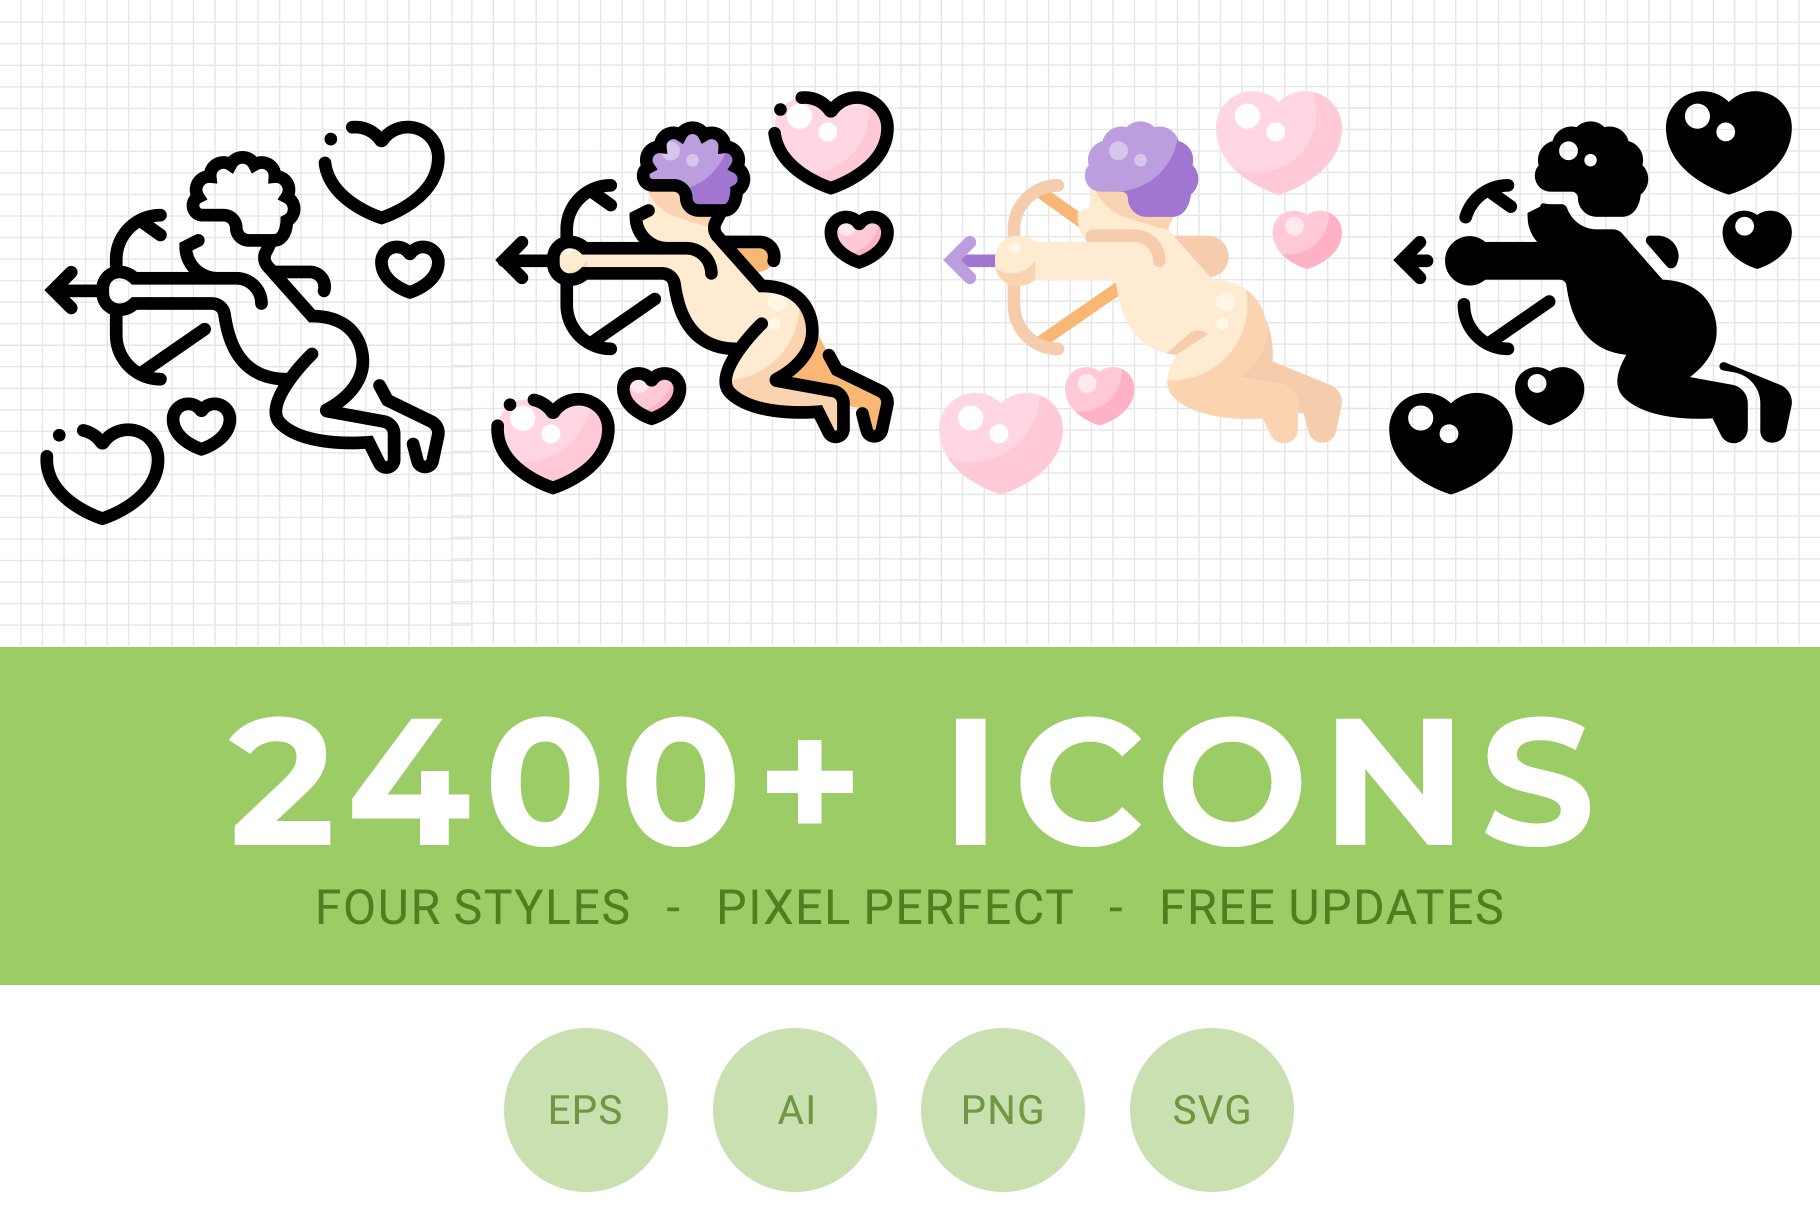 4 styles 2,400 icons - Boldround cover image.